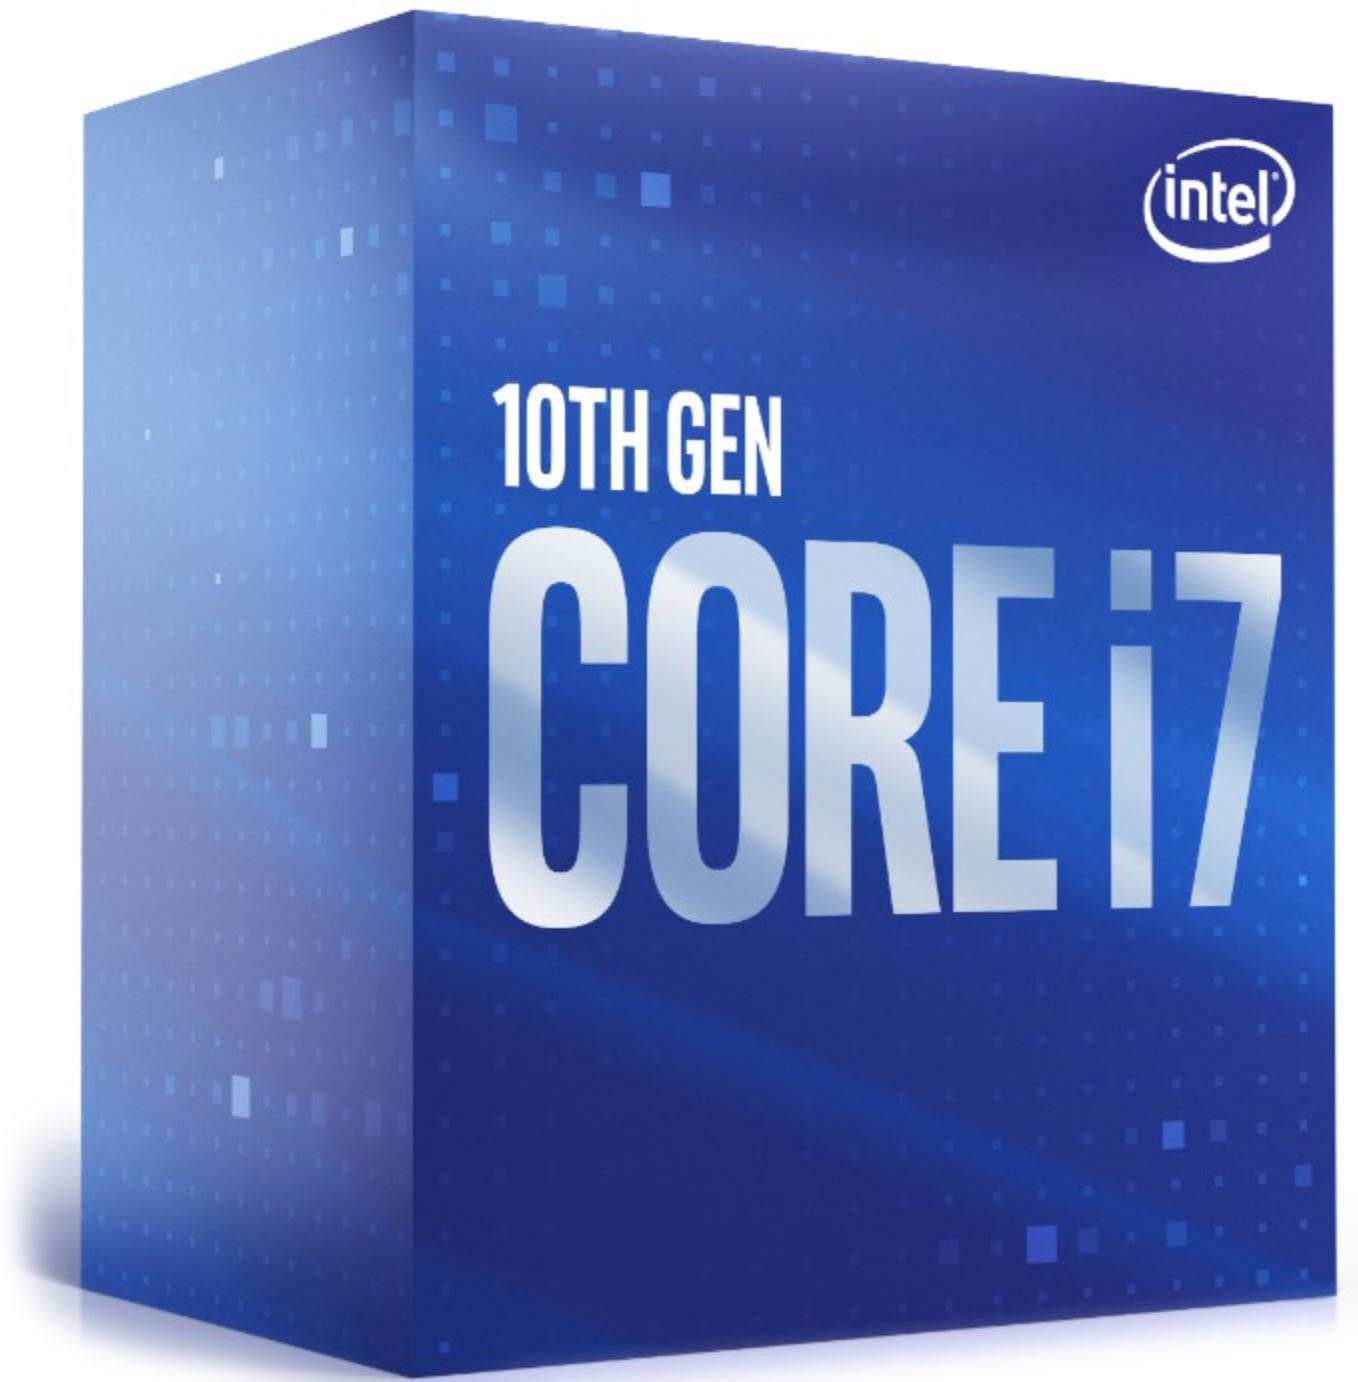 Intel Core i7-10700F CPU 2.9GHz/8-core/LGA1200/16MB/